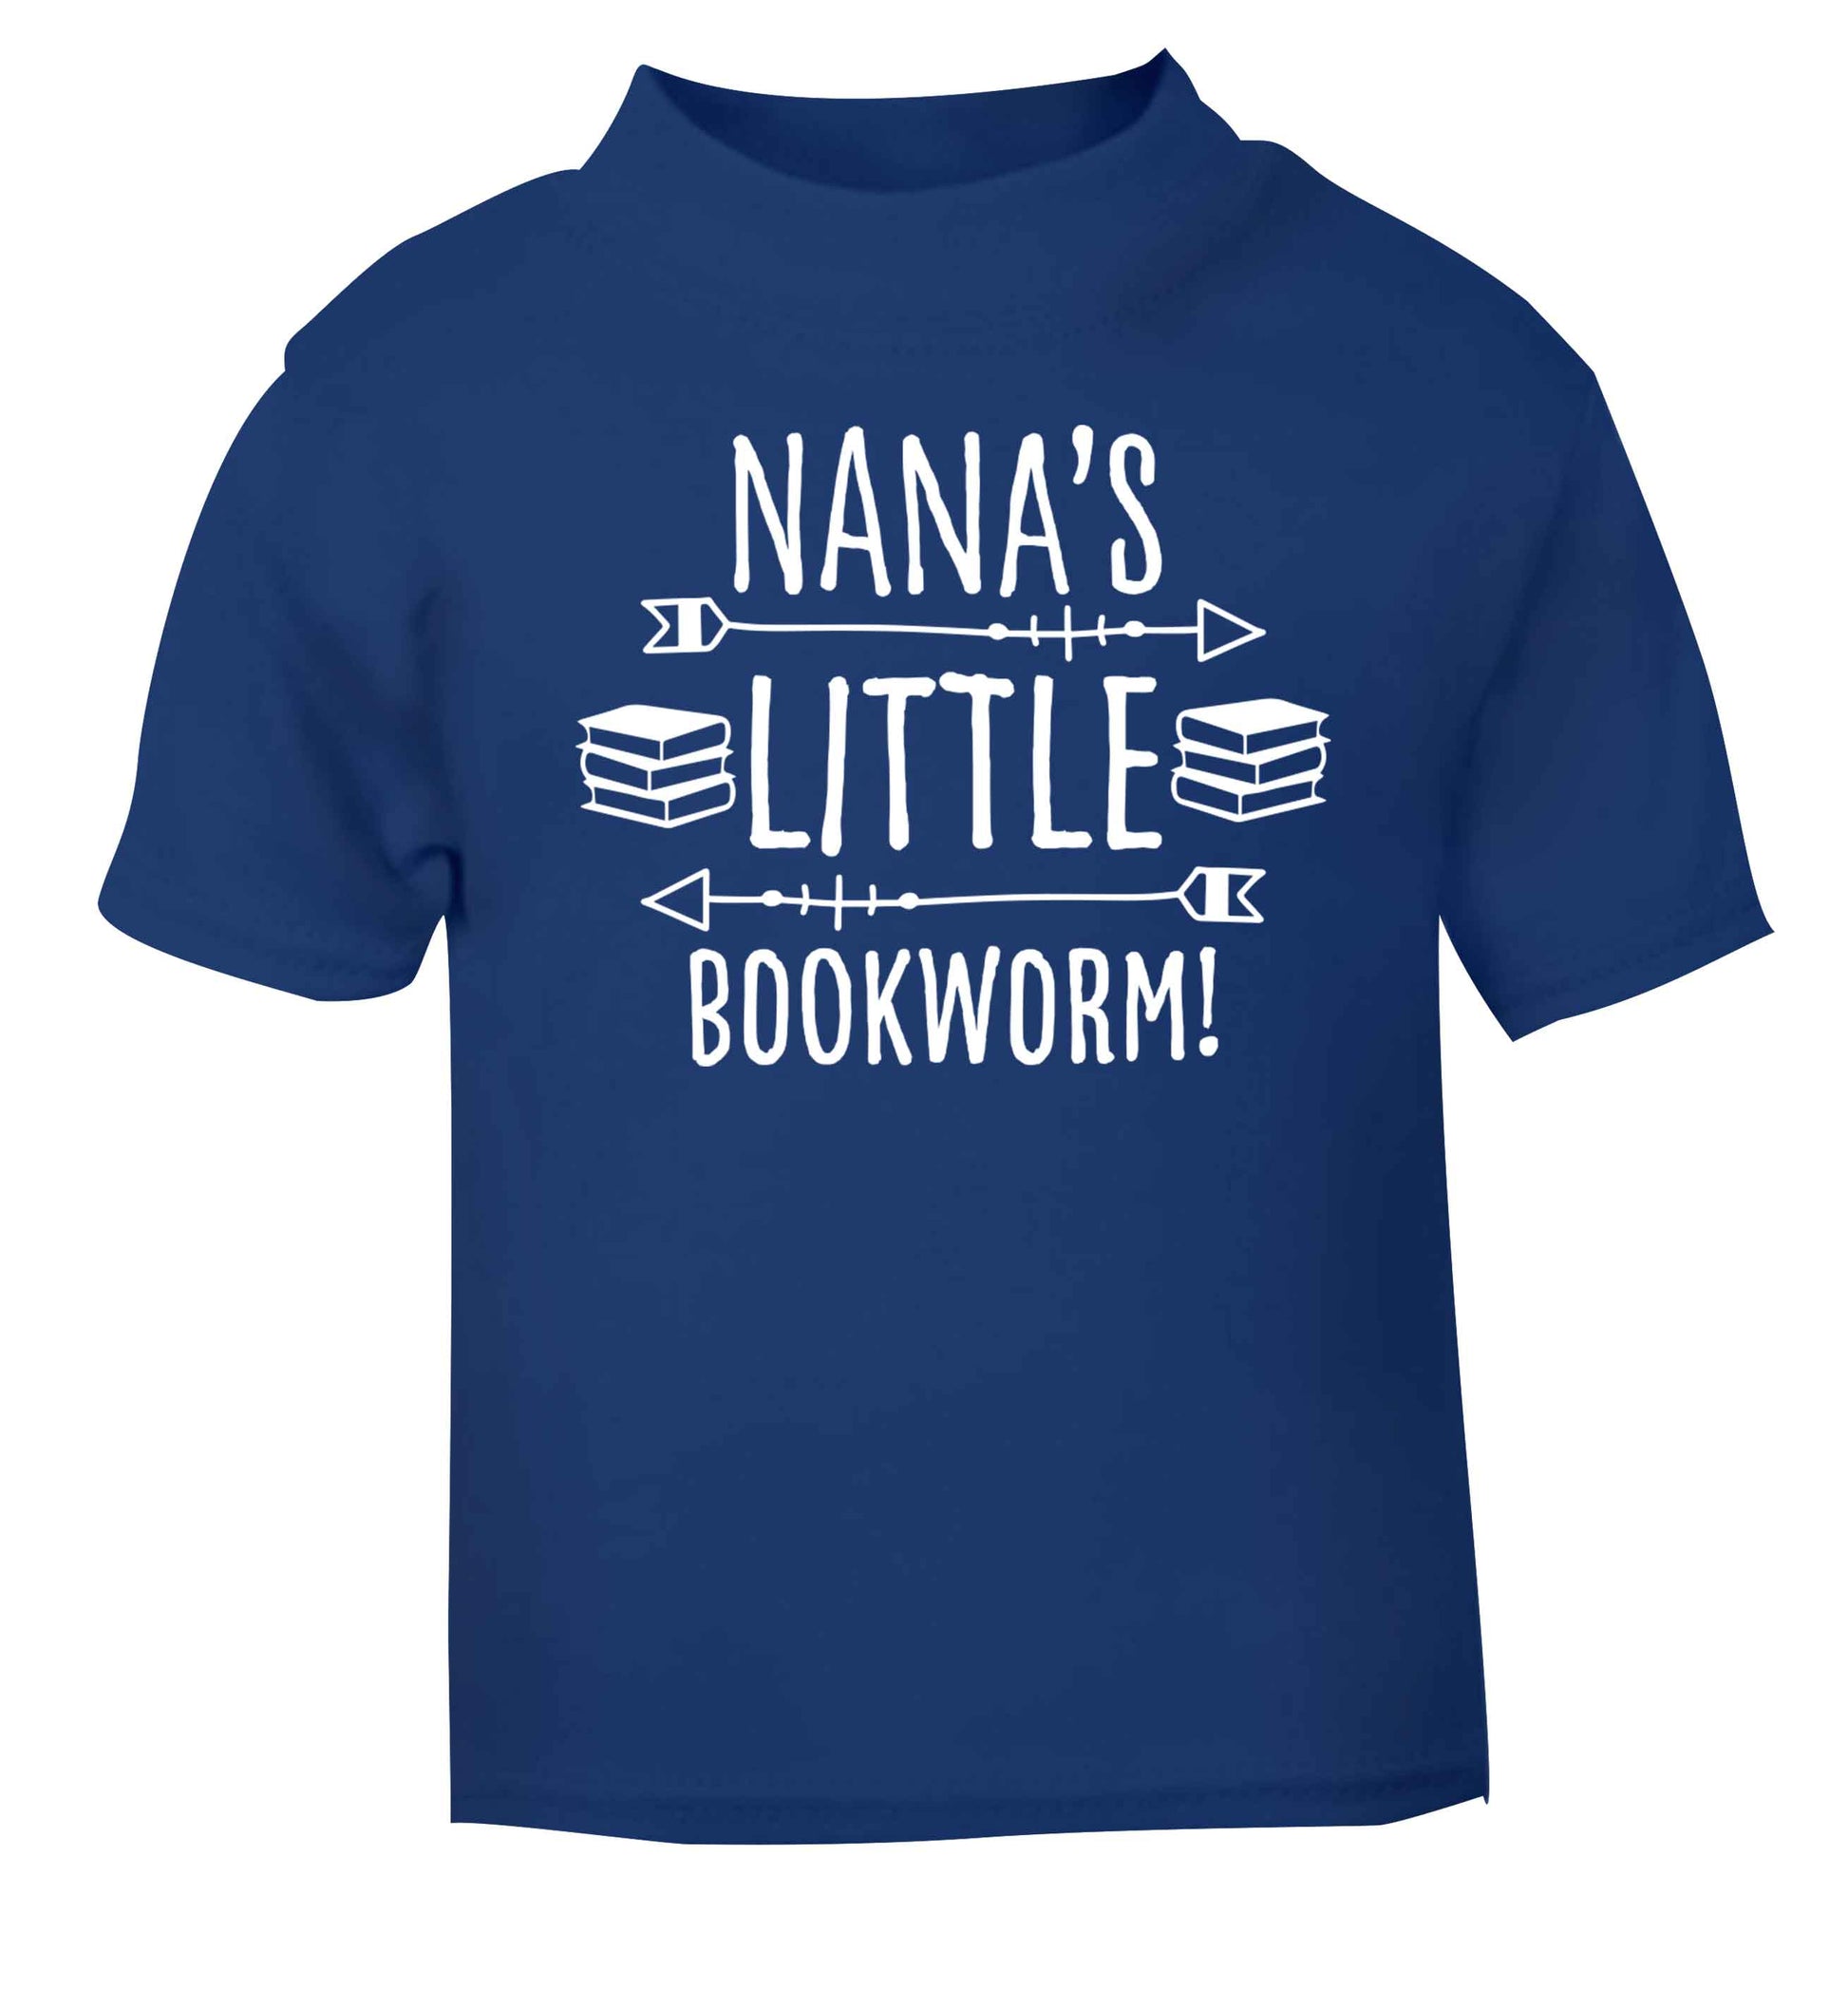 Grandad's little bookworm blue baby toddler Tshirt 2 Years